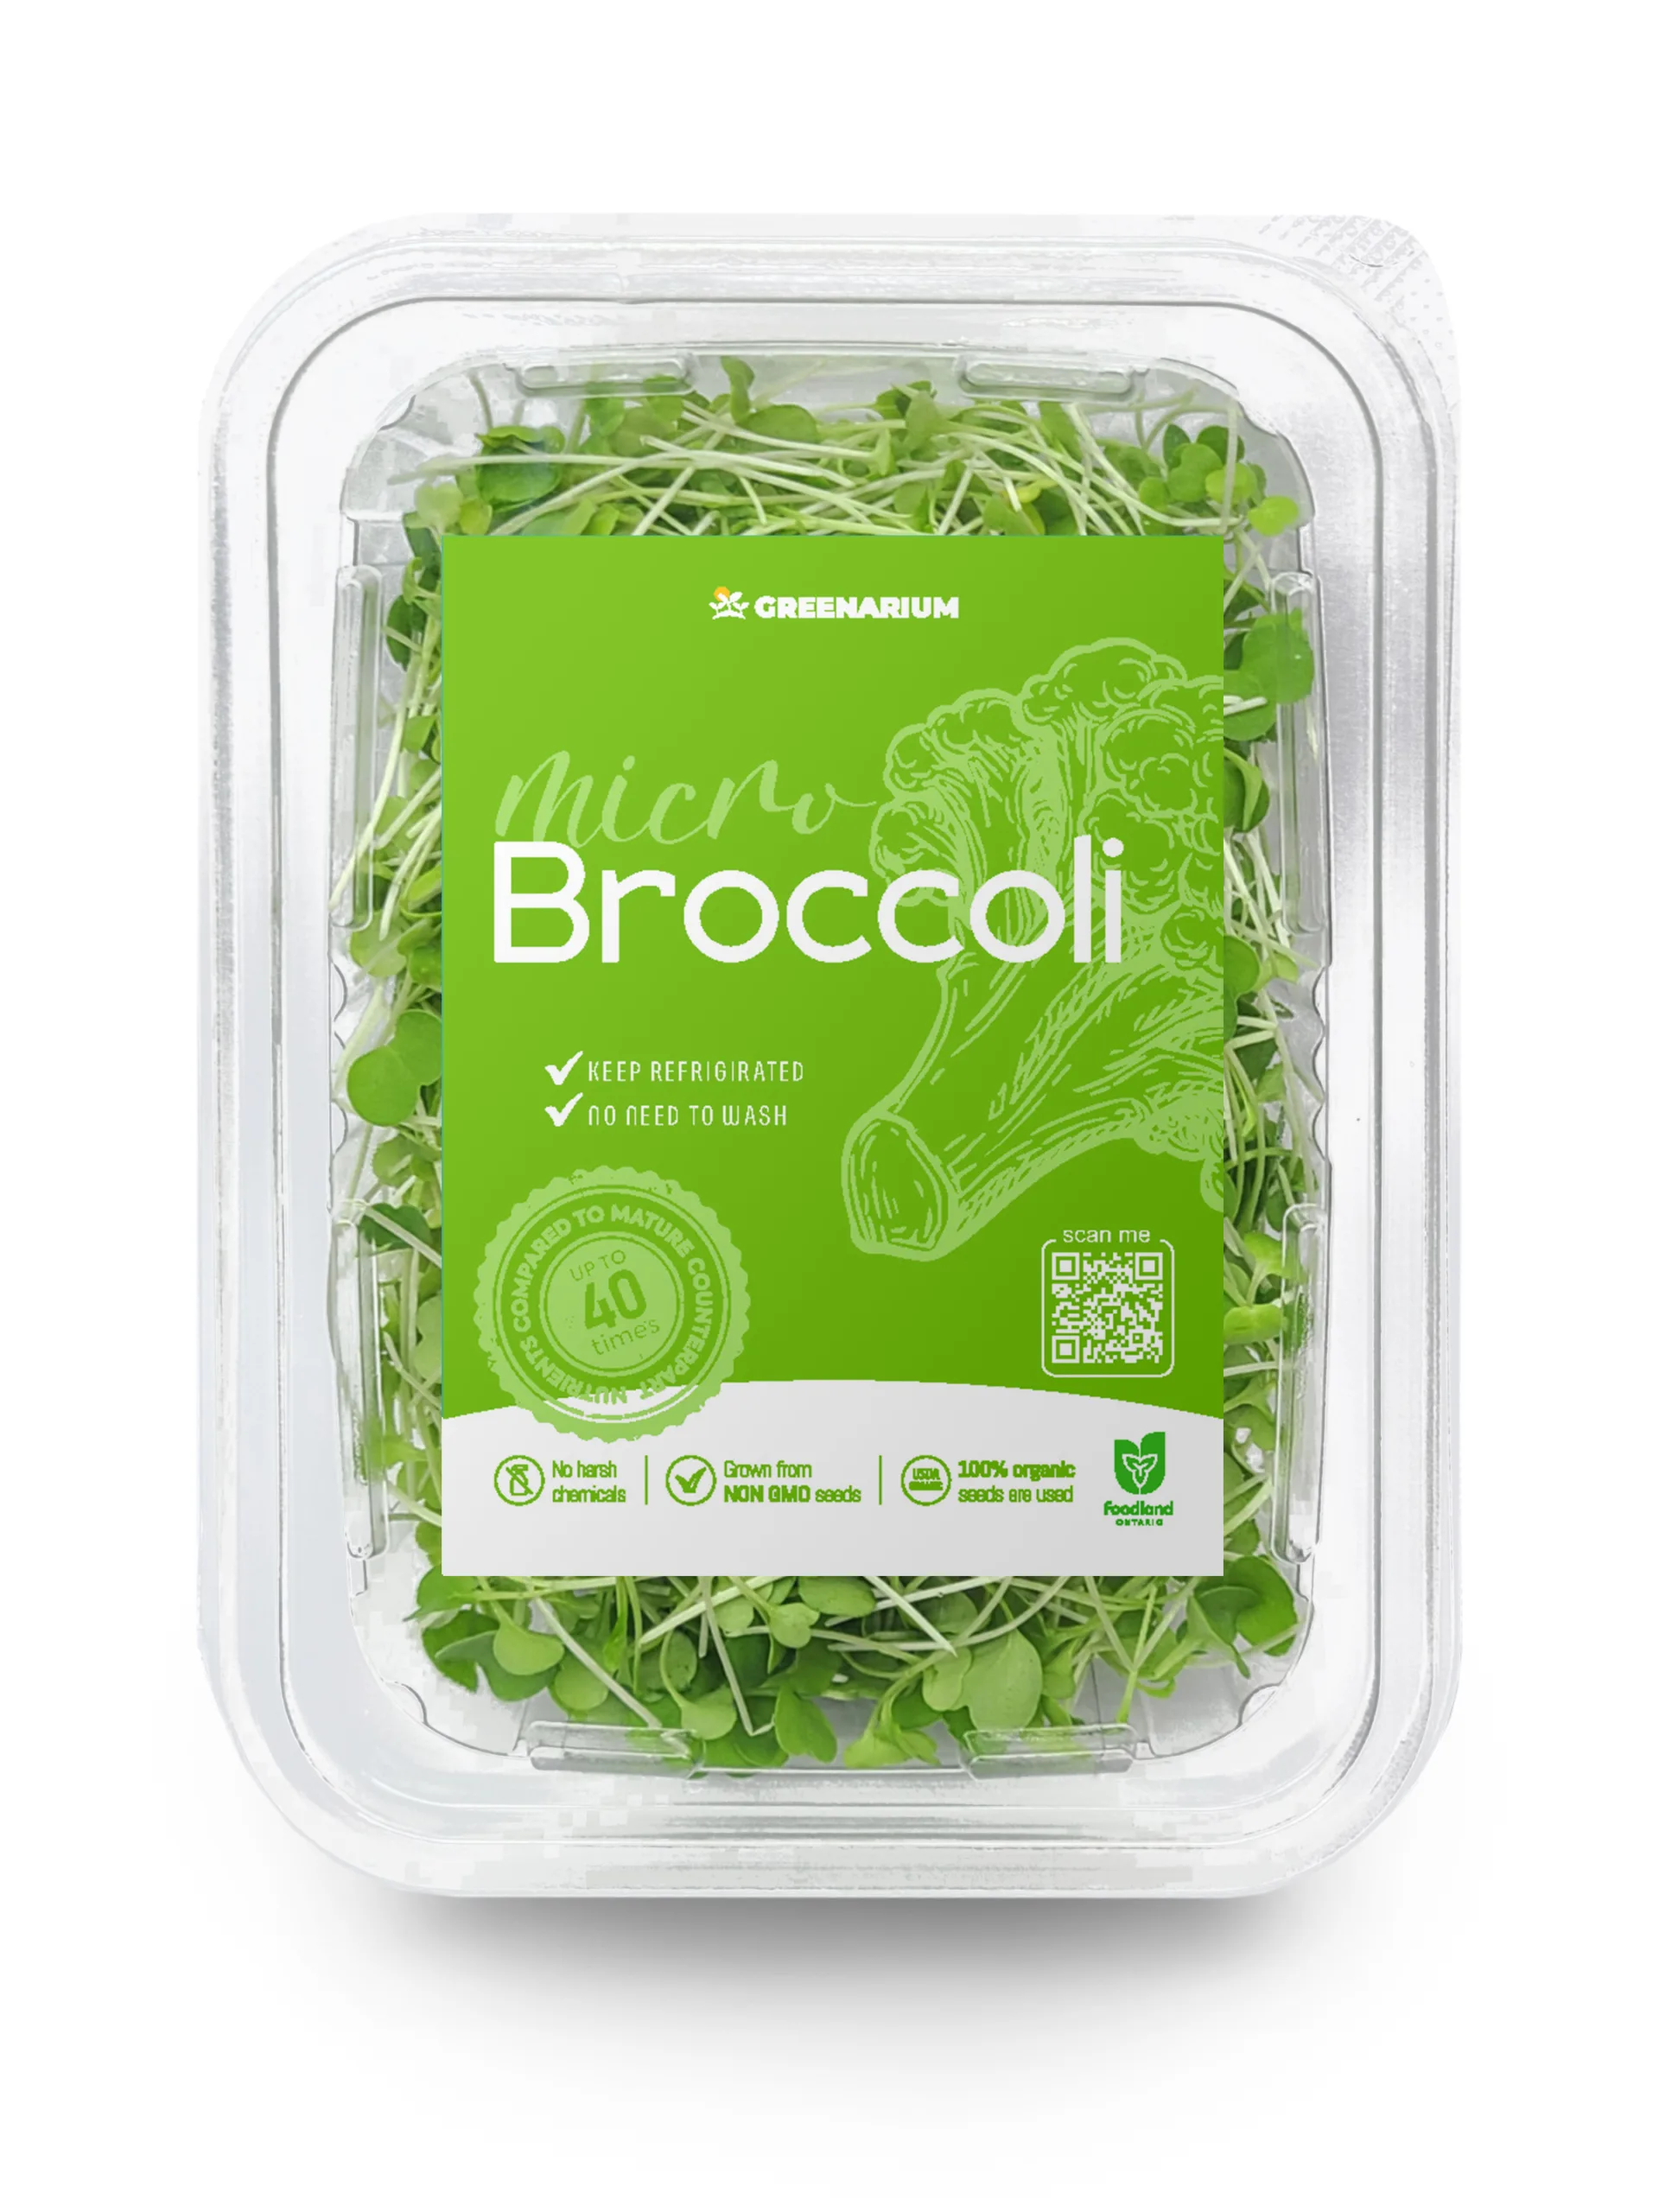 Broccoli microgreens